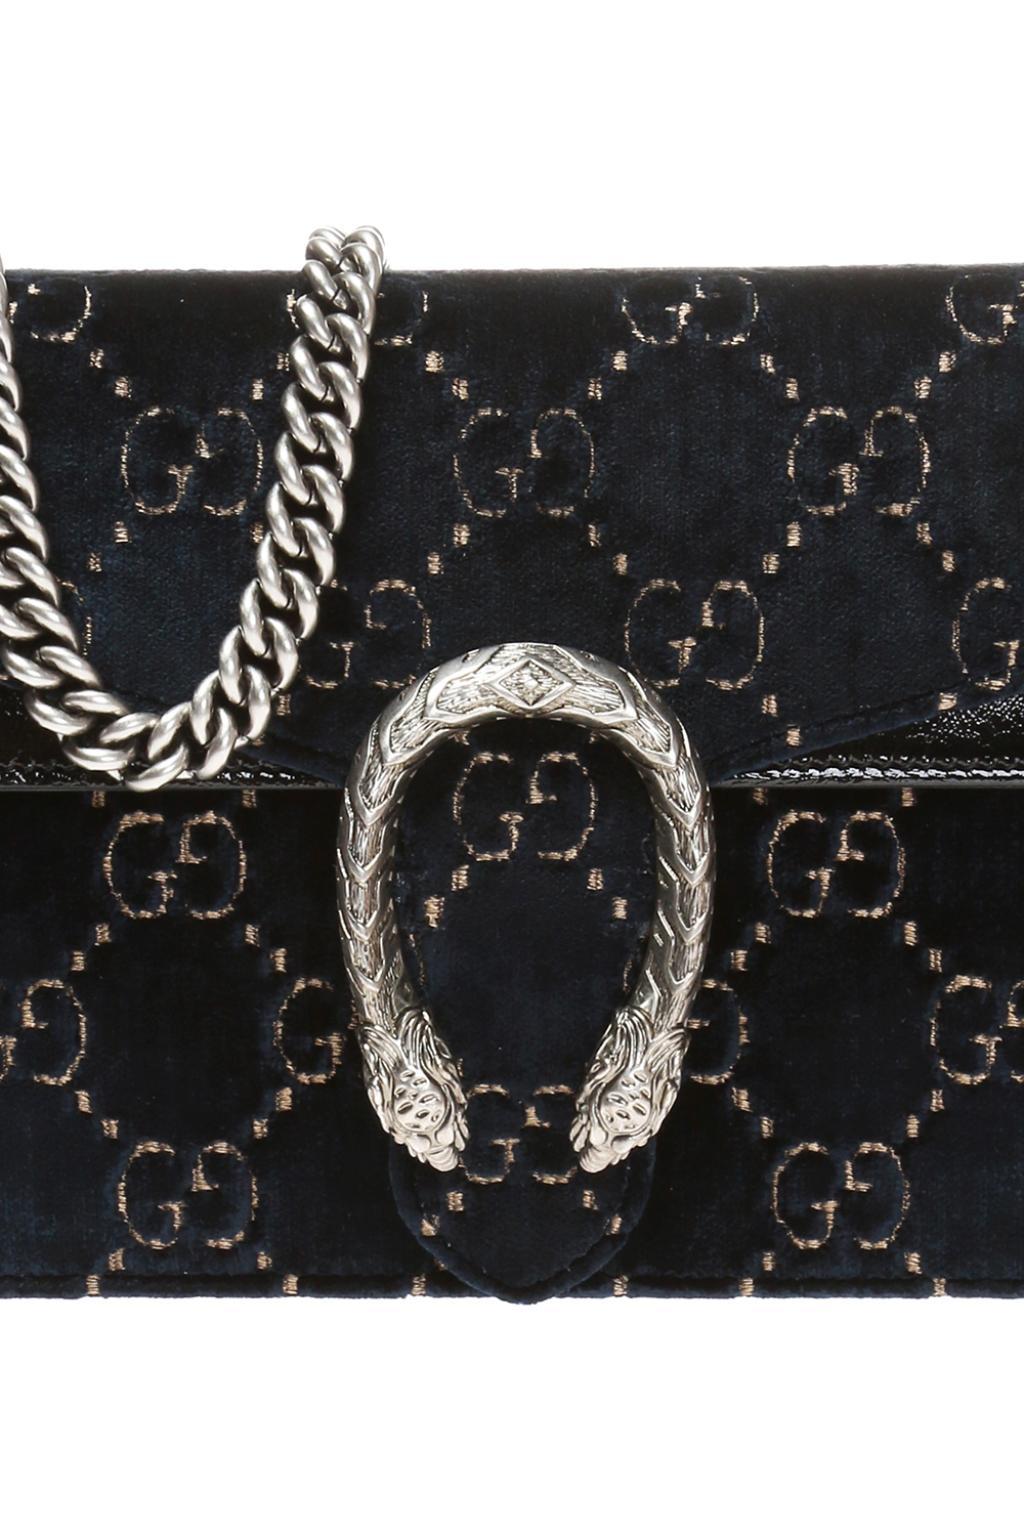 Gucci Dionysus Small burgundy velvet patent leather Swarovski lock bag.